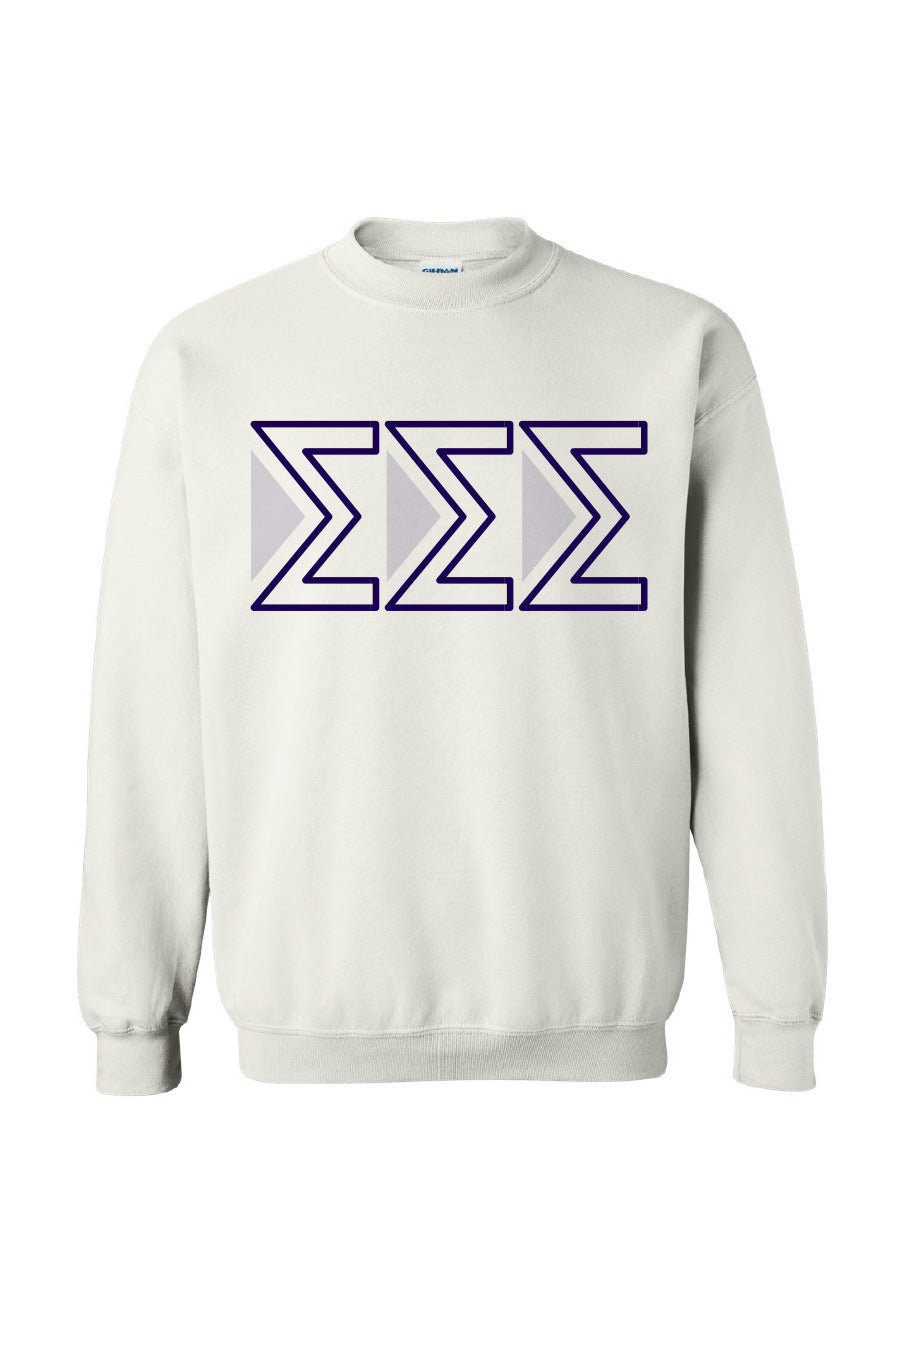 Tri Sigma Letters Sweatshirt